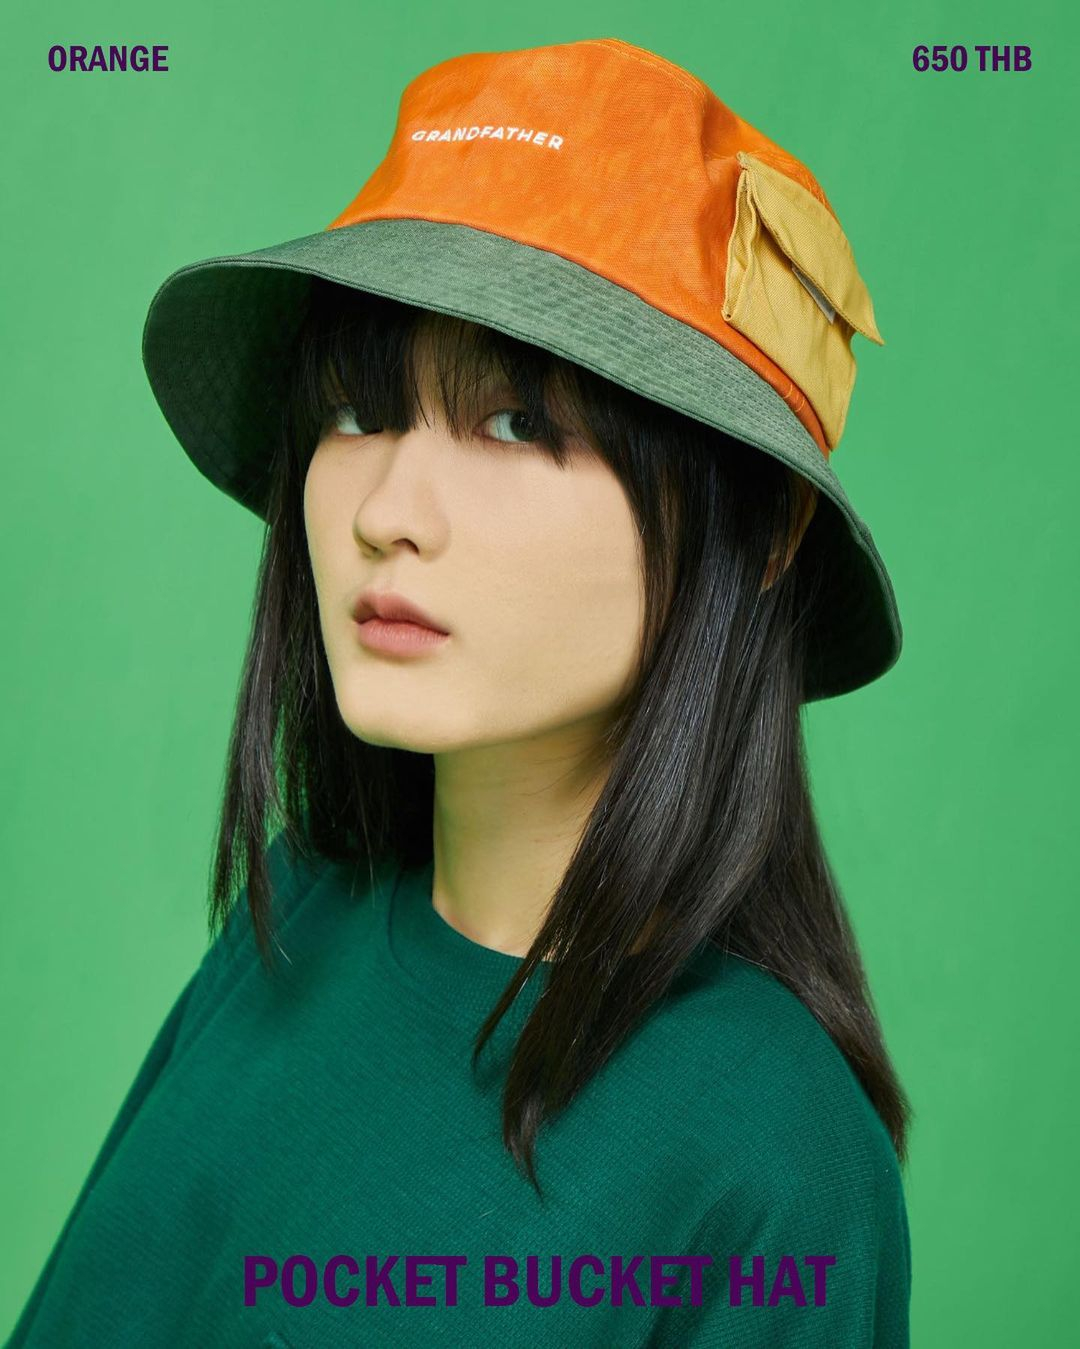 Pocket Bucket Hat (Orange)